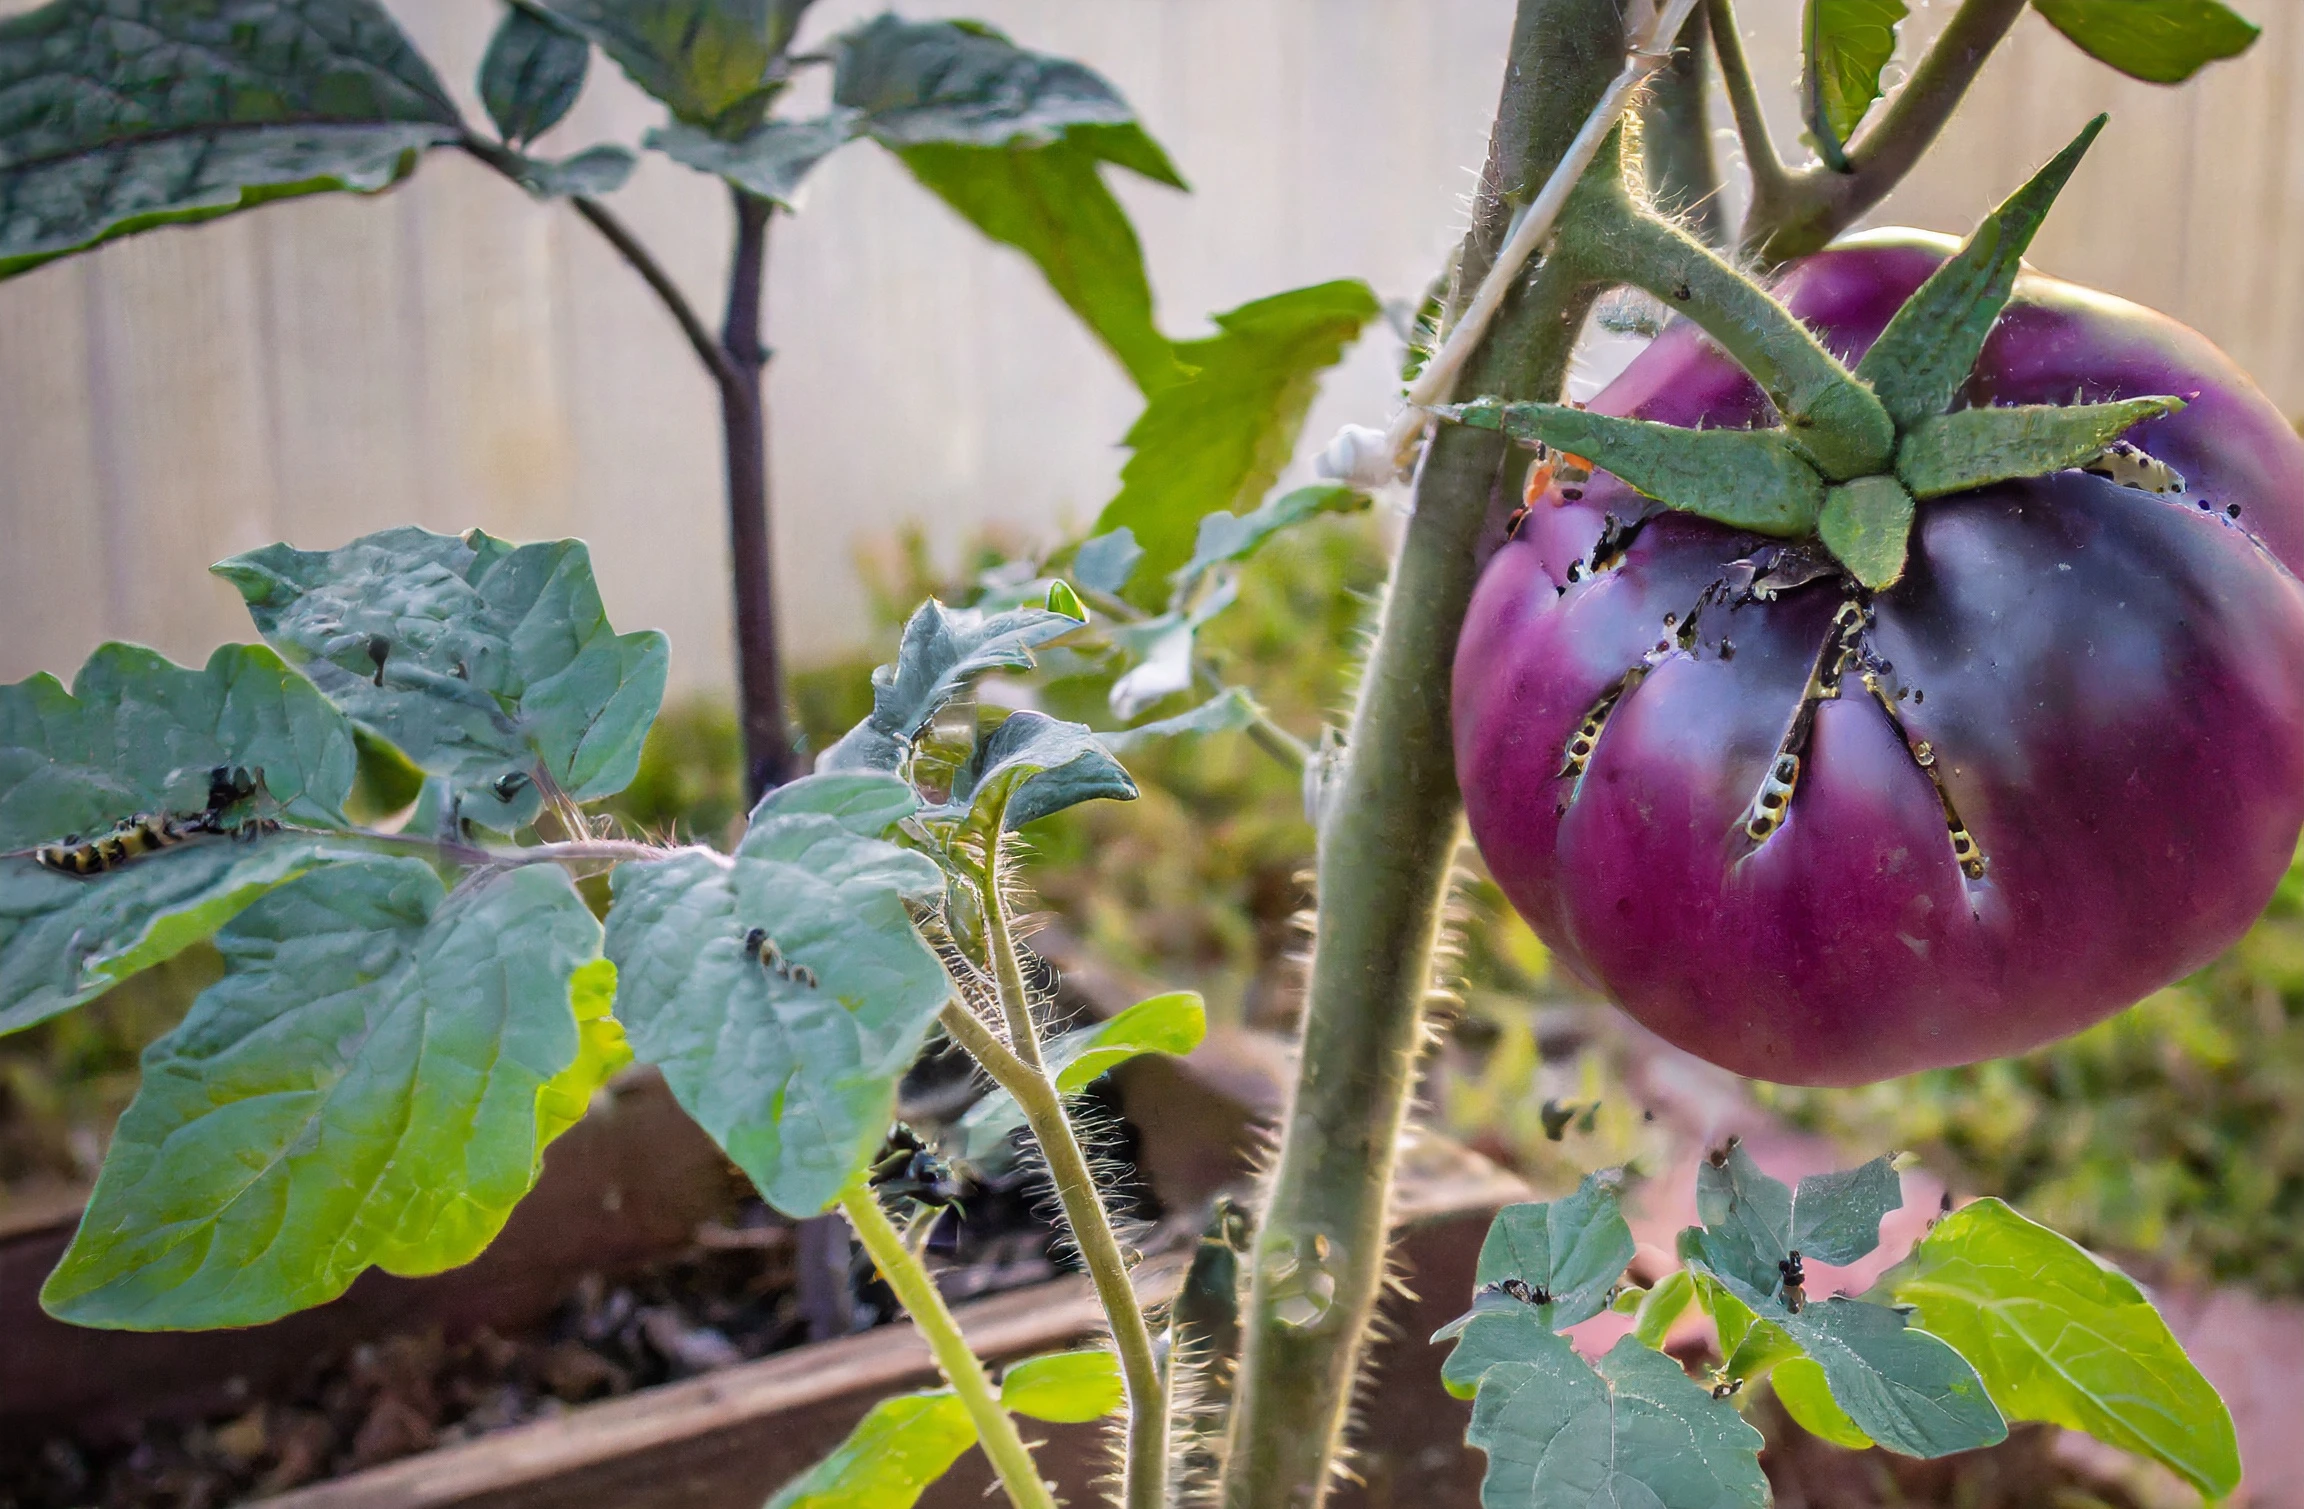 purple tomatoe with pests